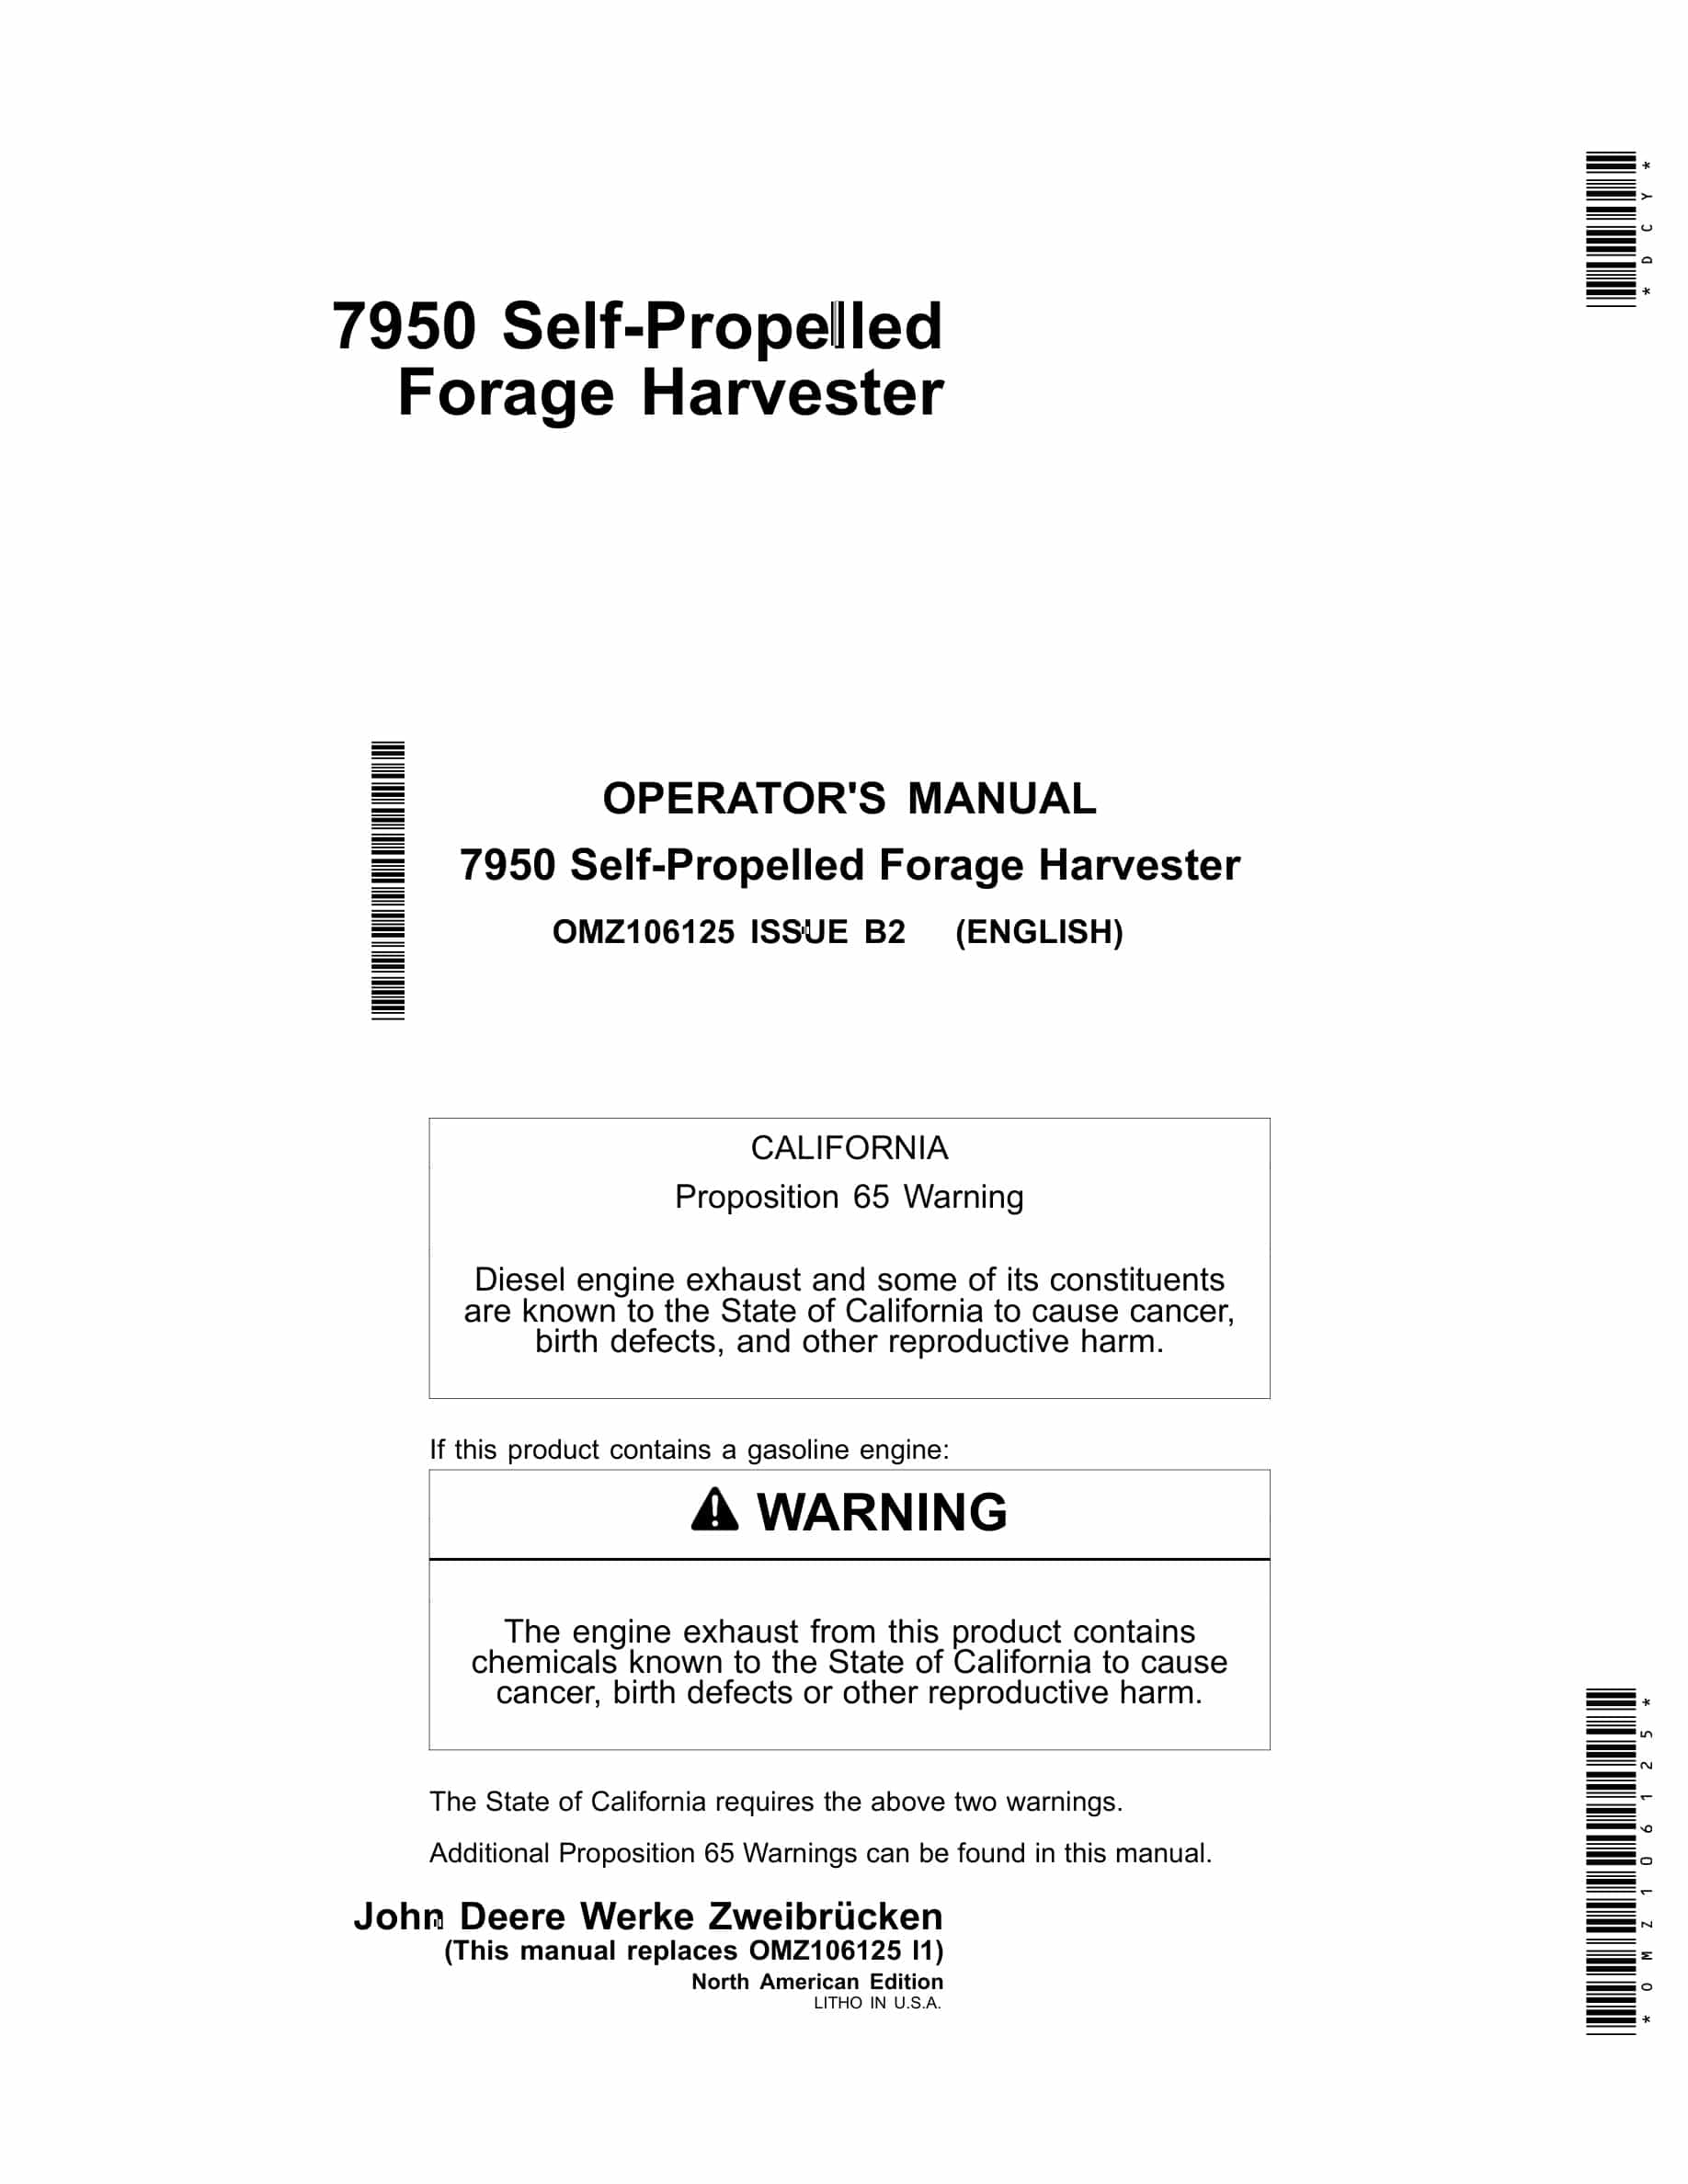 John Deere 7950 Self-Propelled Forage Harvester Operator Manual OMZ106125-1